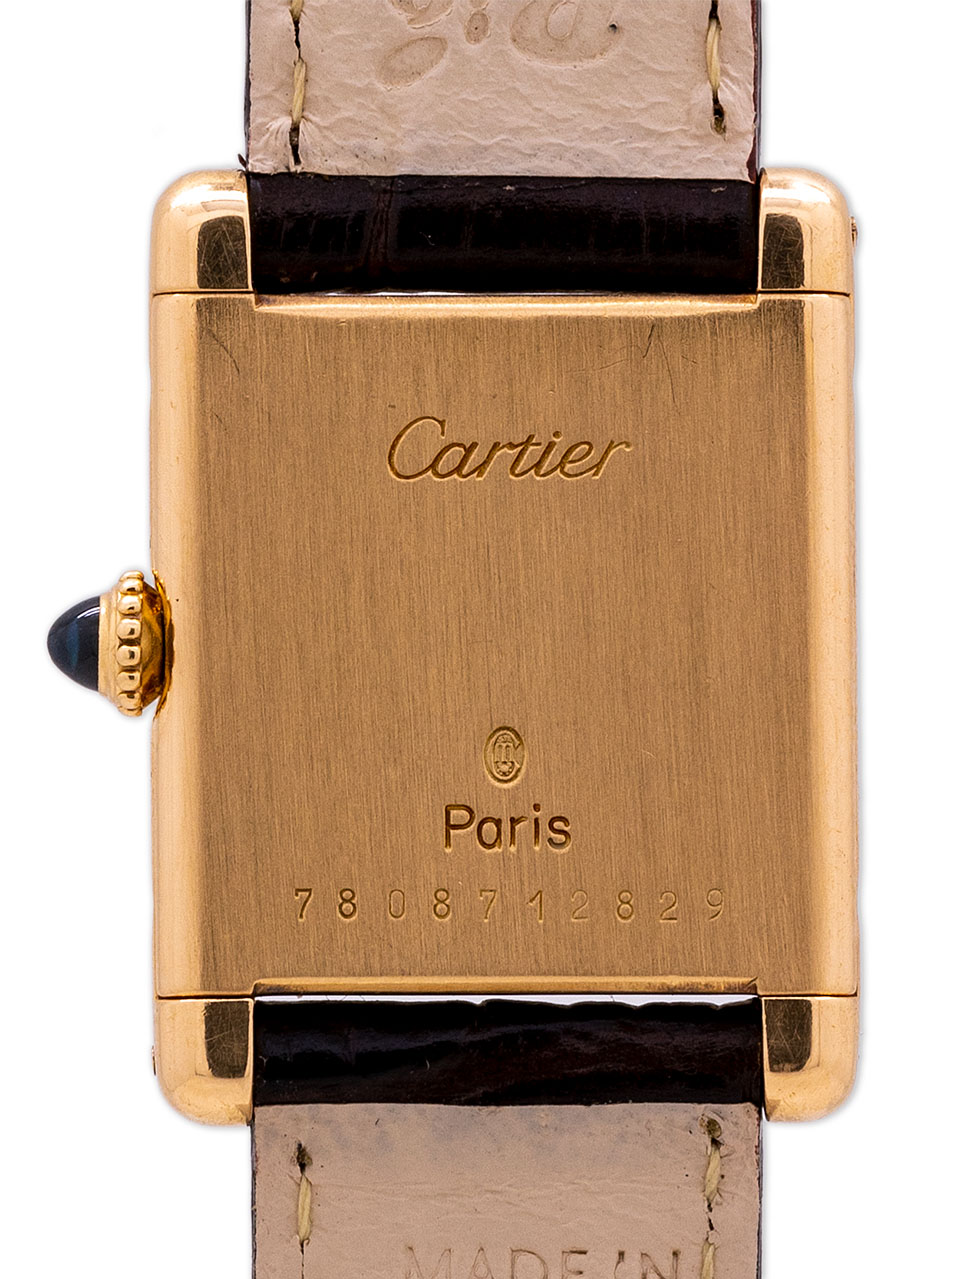 SOLD - Vintage Cartier 18k Manual Wind Tank Louis - $2,500